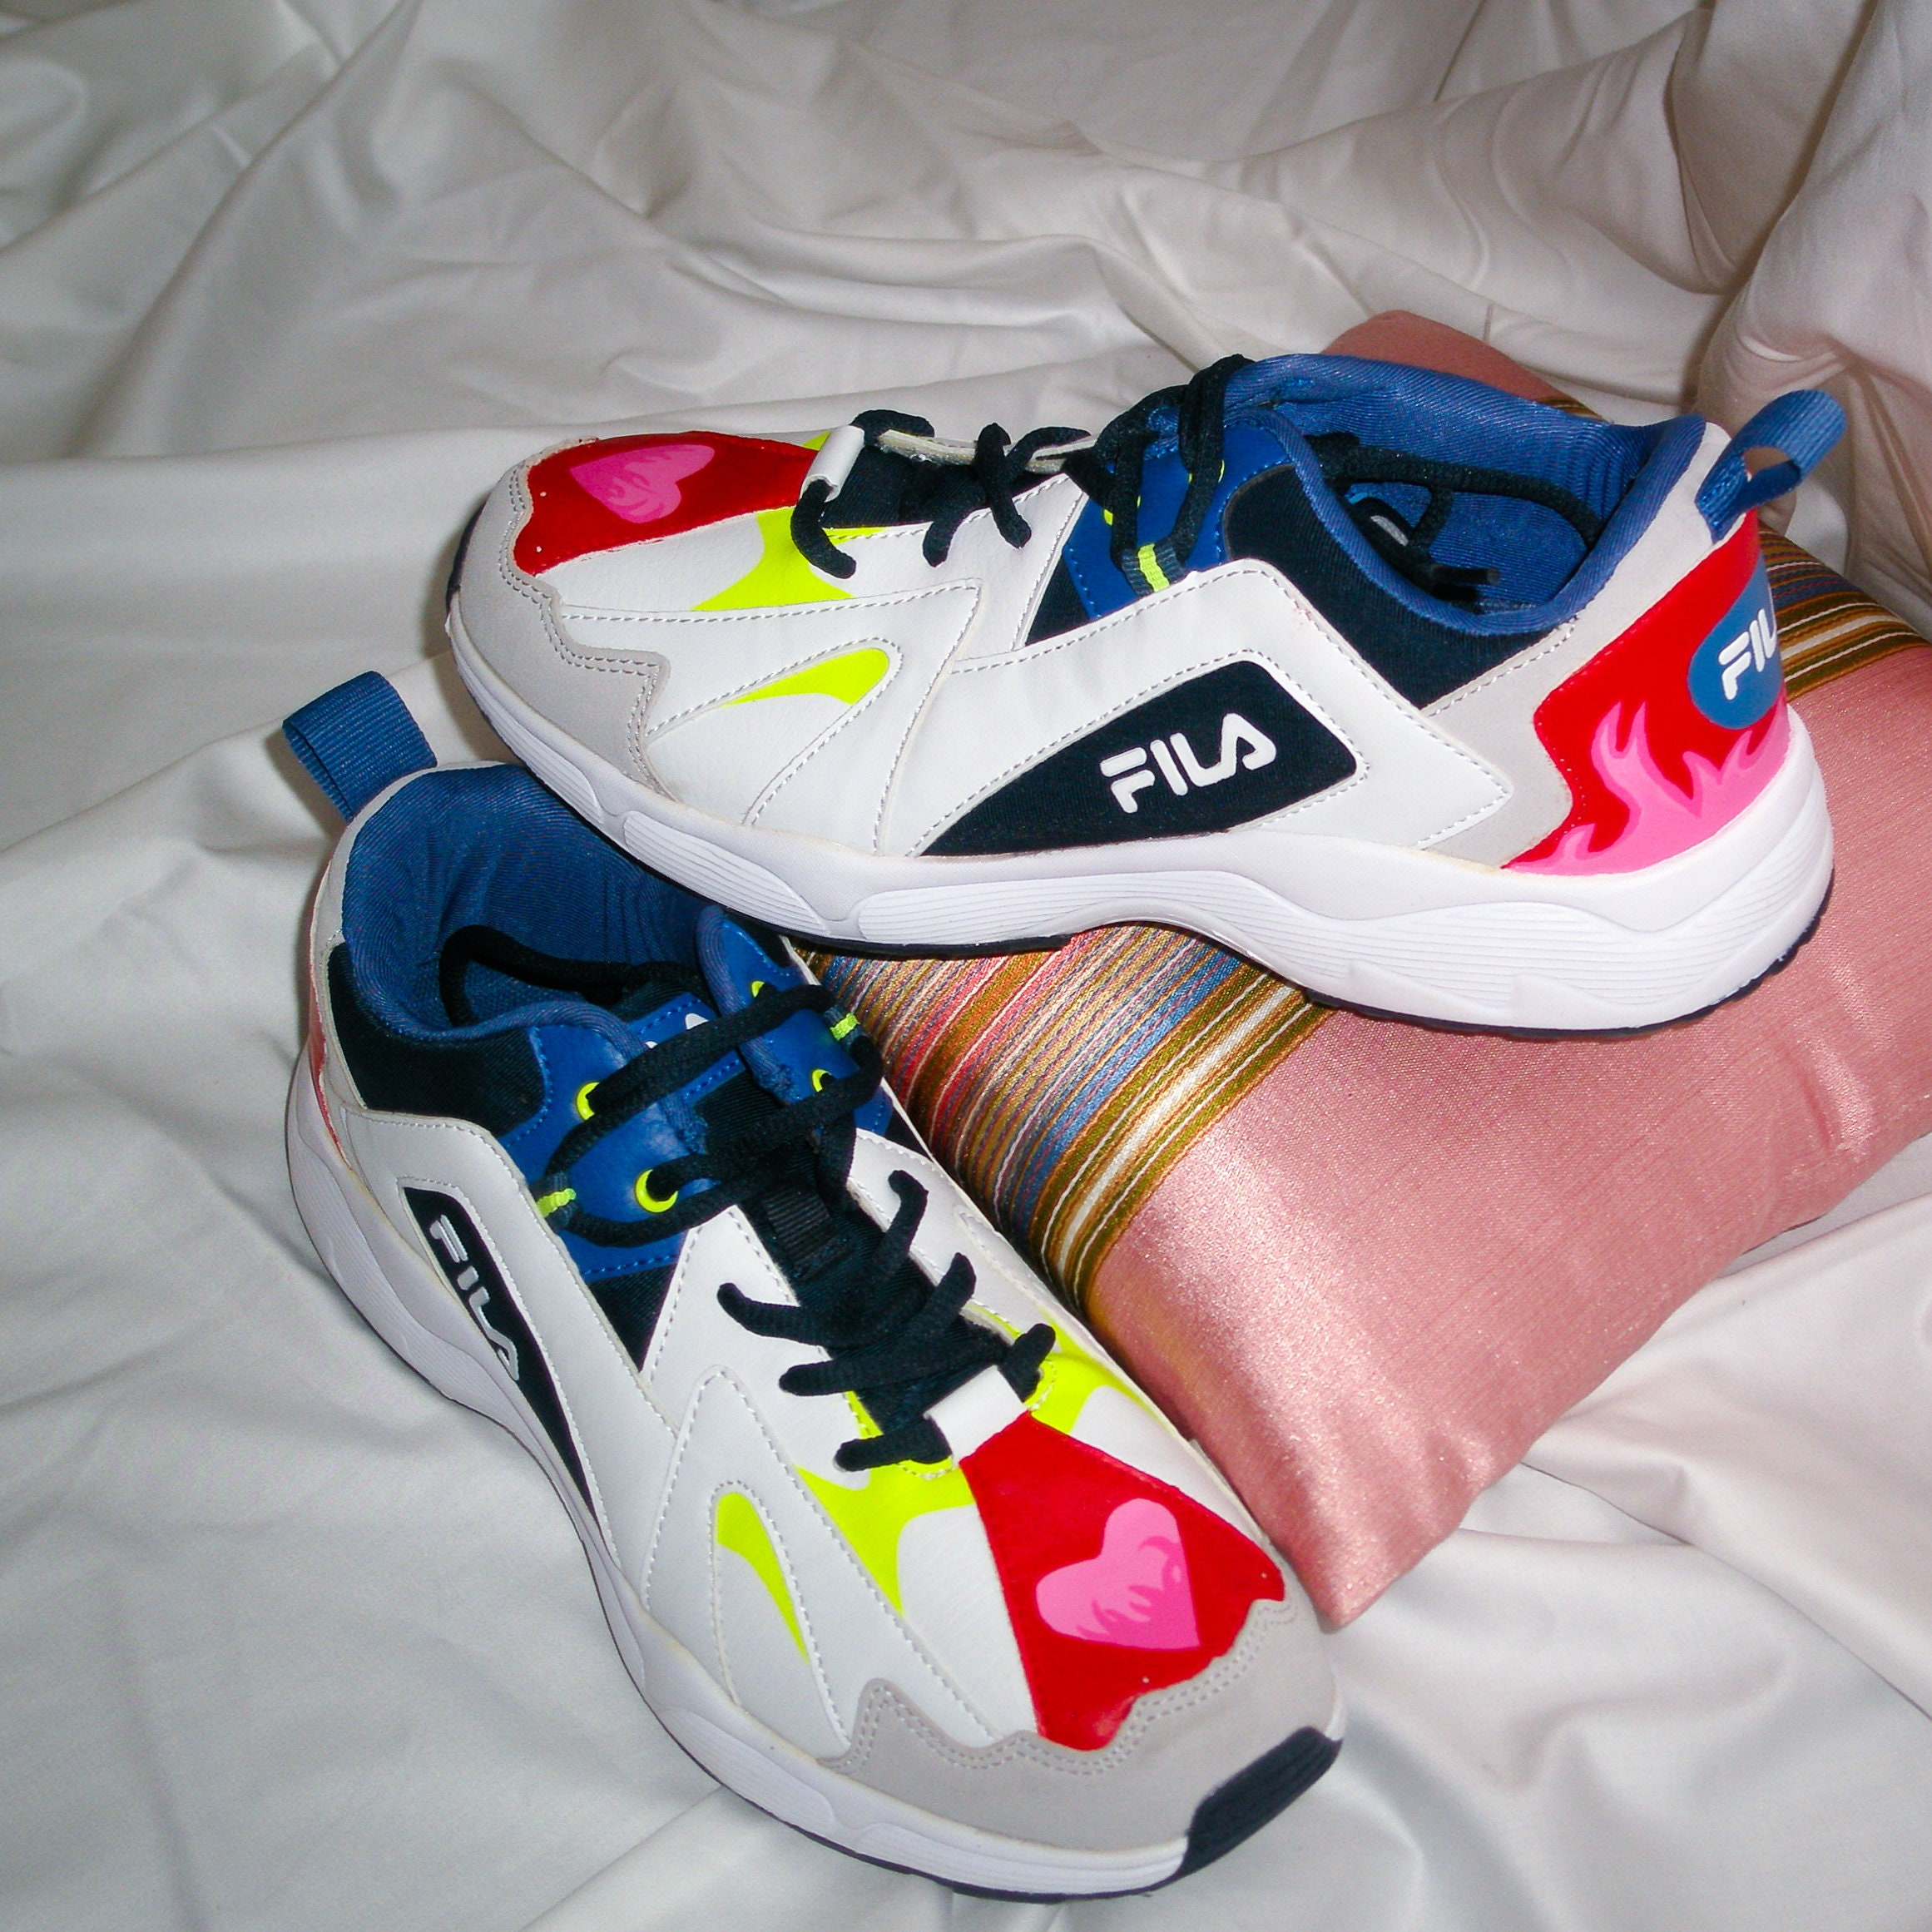 Custom Fila Shoes - Make Own Fila Shoes